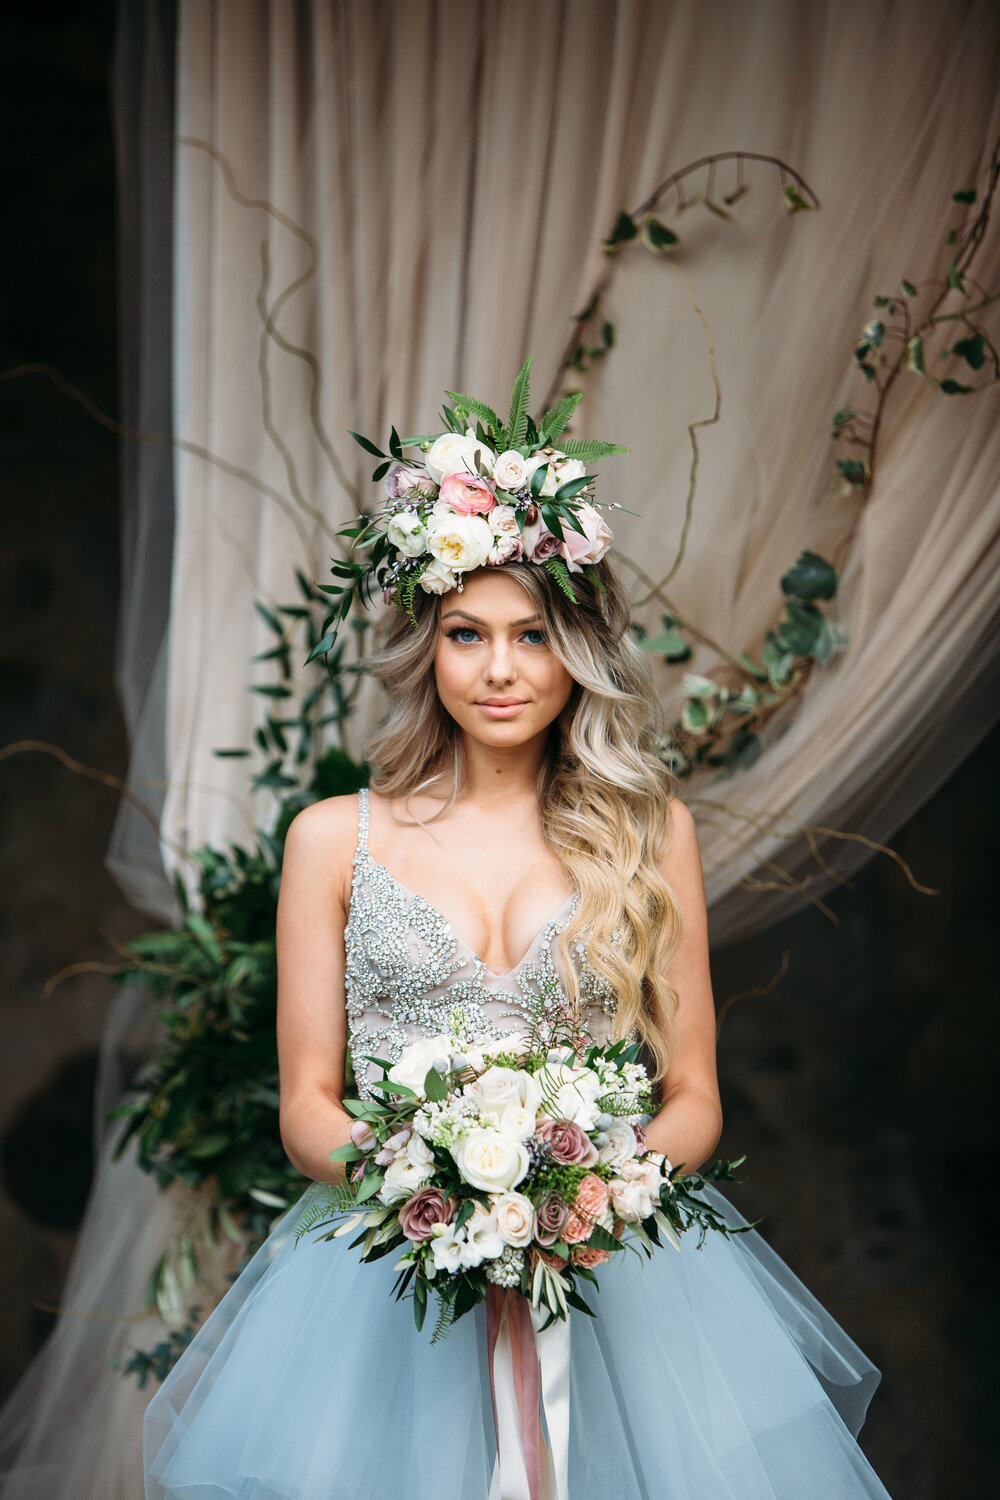 luxury-wedding-bridal-bouquet--headpiece-draping-garden-rose-lilac-lavender-greenery-flowing-ribbon-blushes-whites-upscale-inspiration-northern-california-sonoma-v-sattui-florist-design-violette-fleurs-anna-perevertaylo.jpg